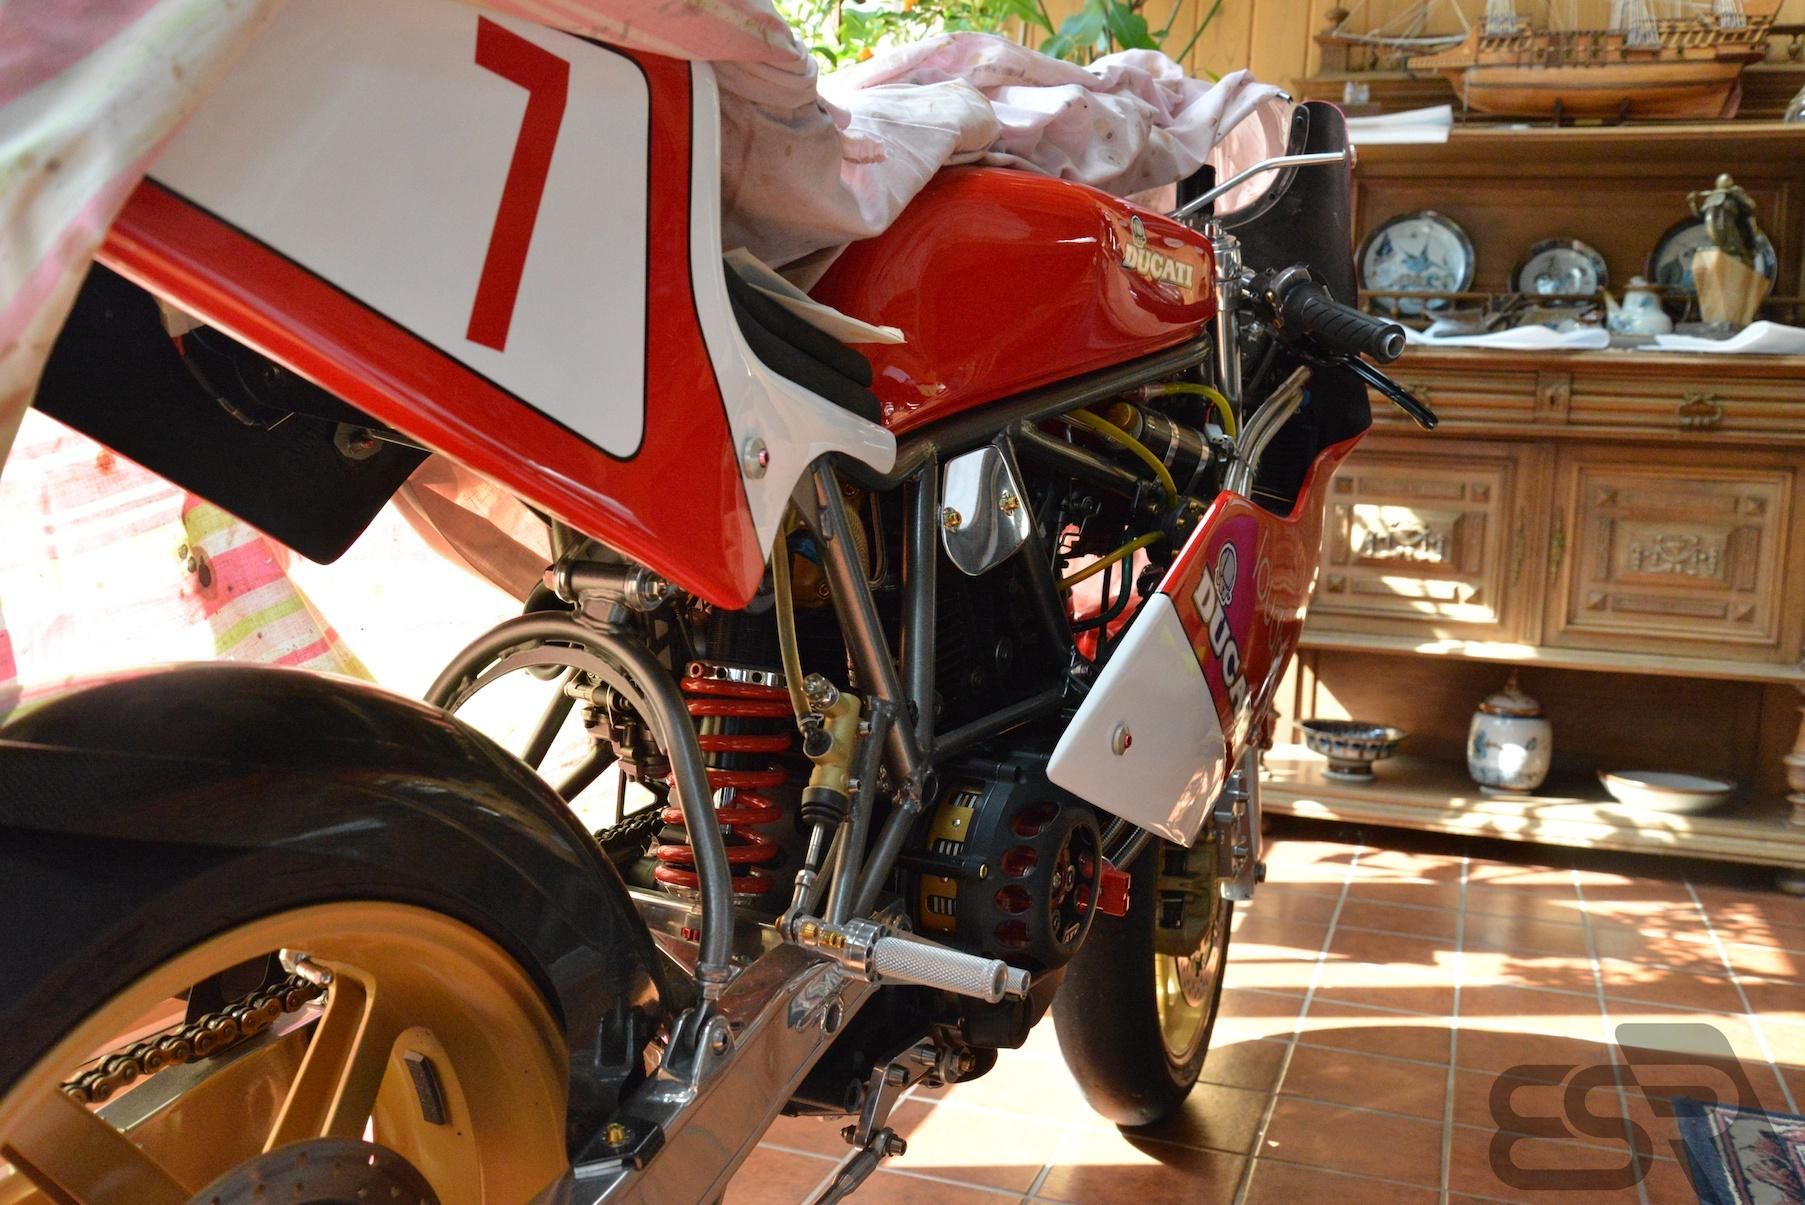 Hodgson Ducati build in progress